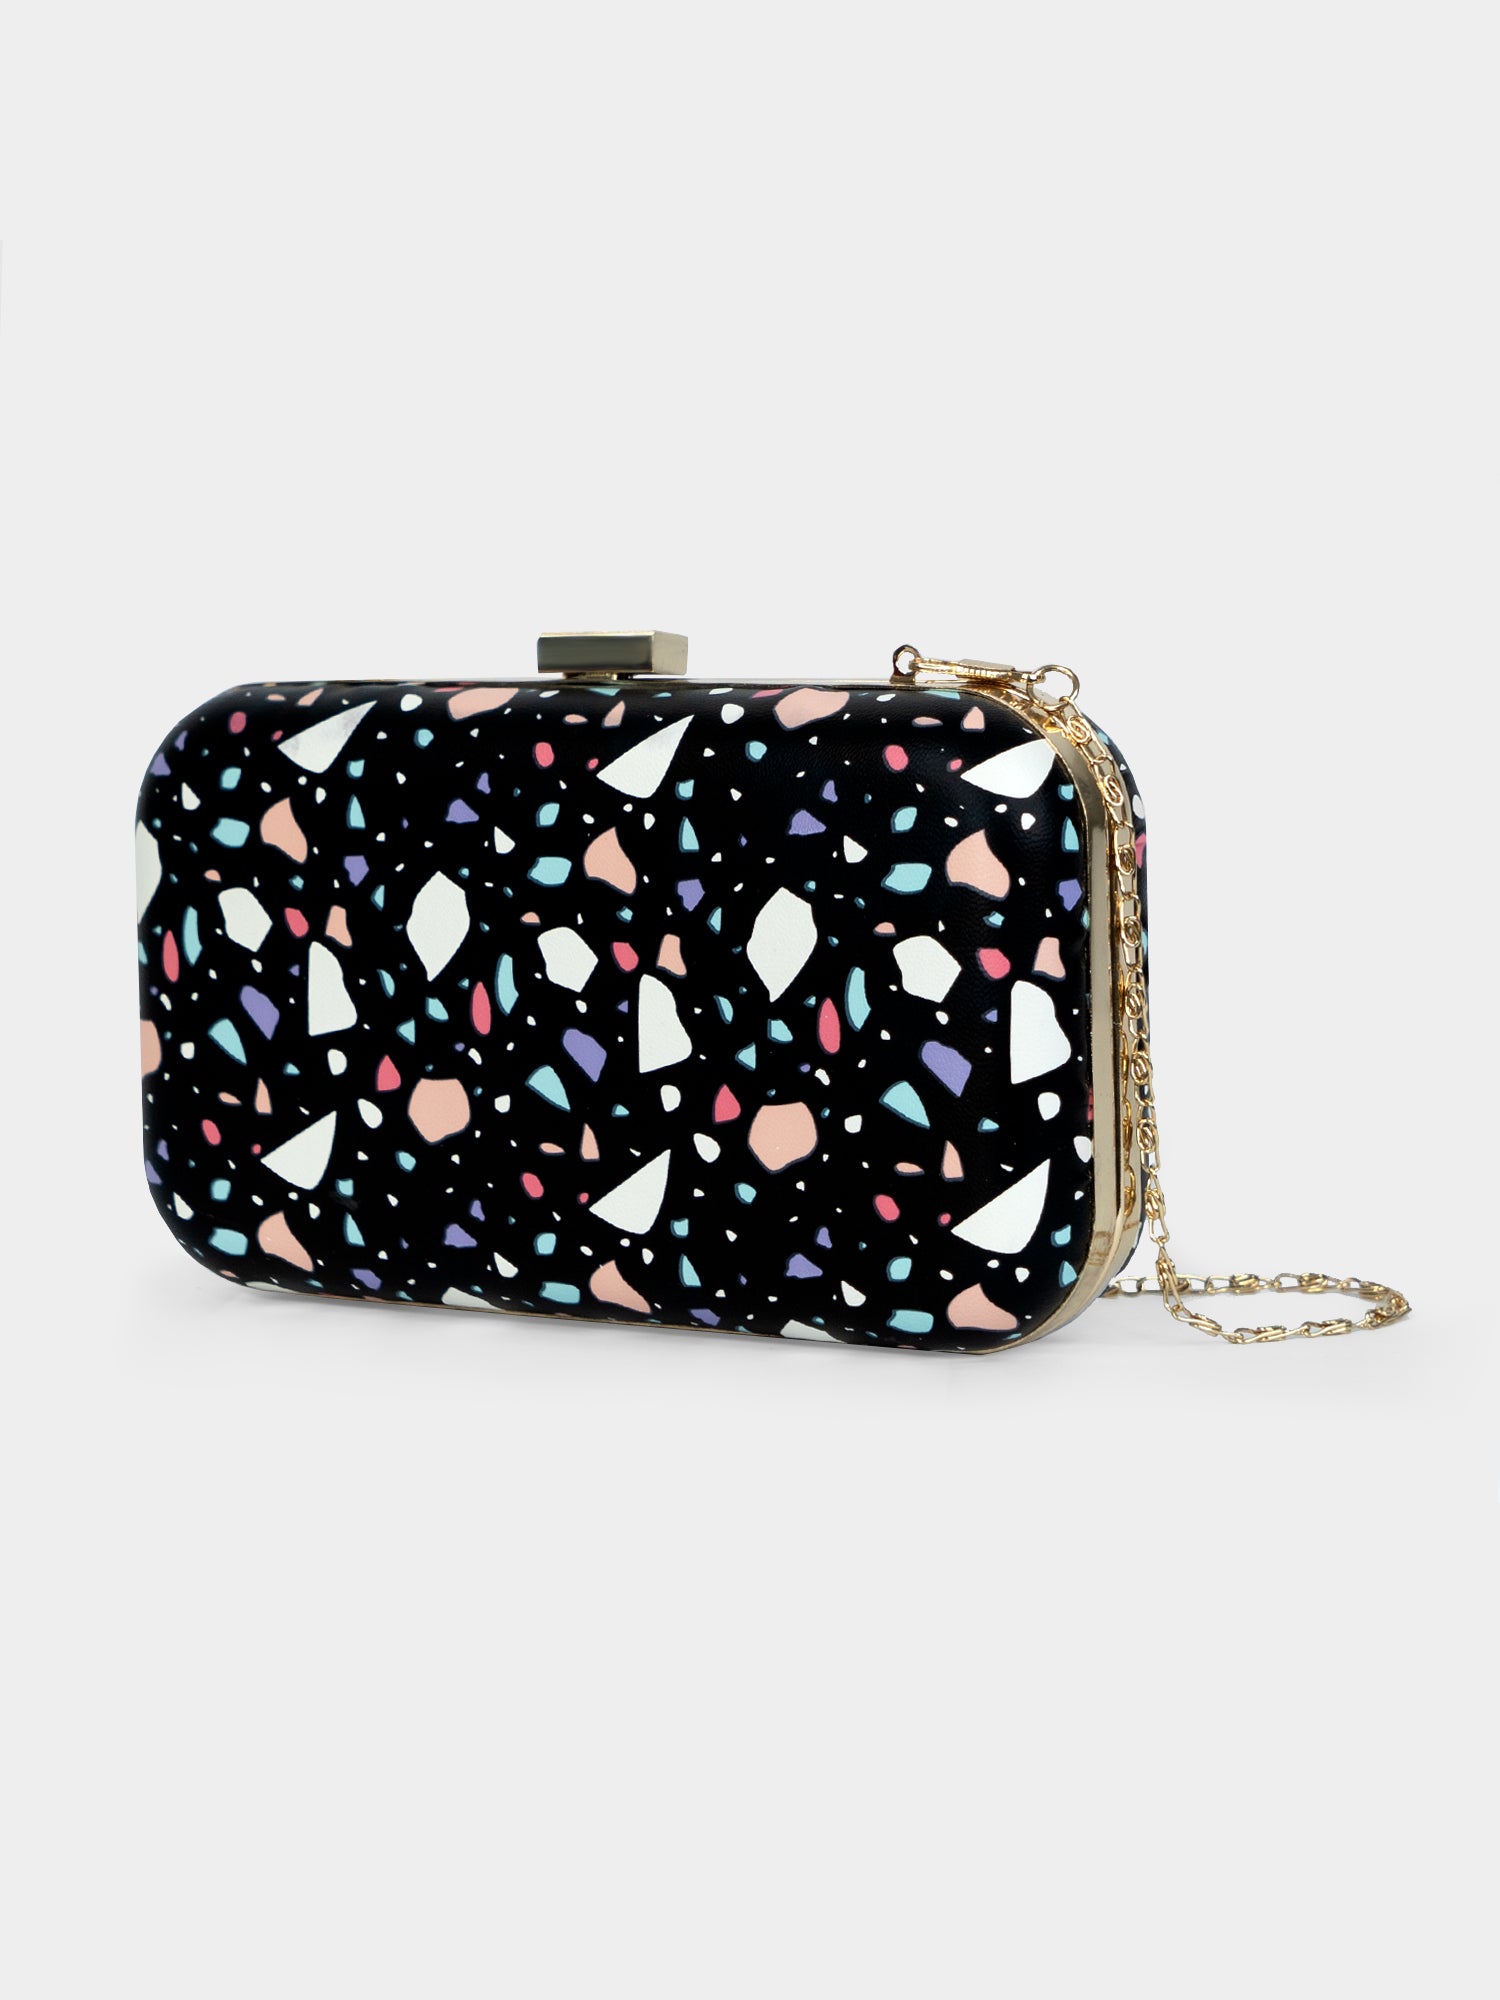 Buy Fashionable Clutch Bag Online - 90106 | Andaaz Fashion